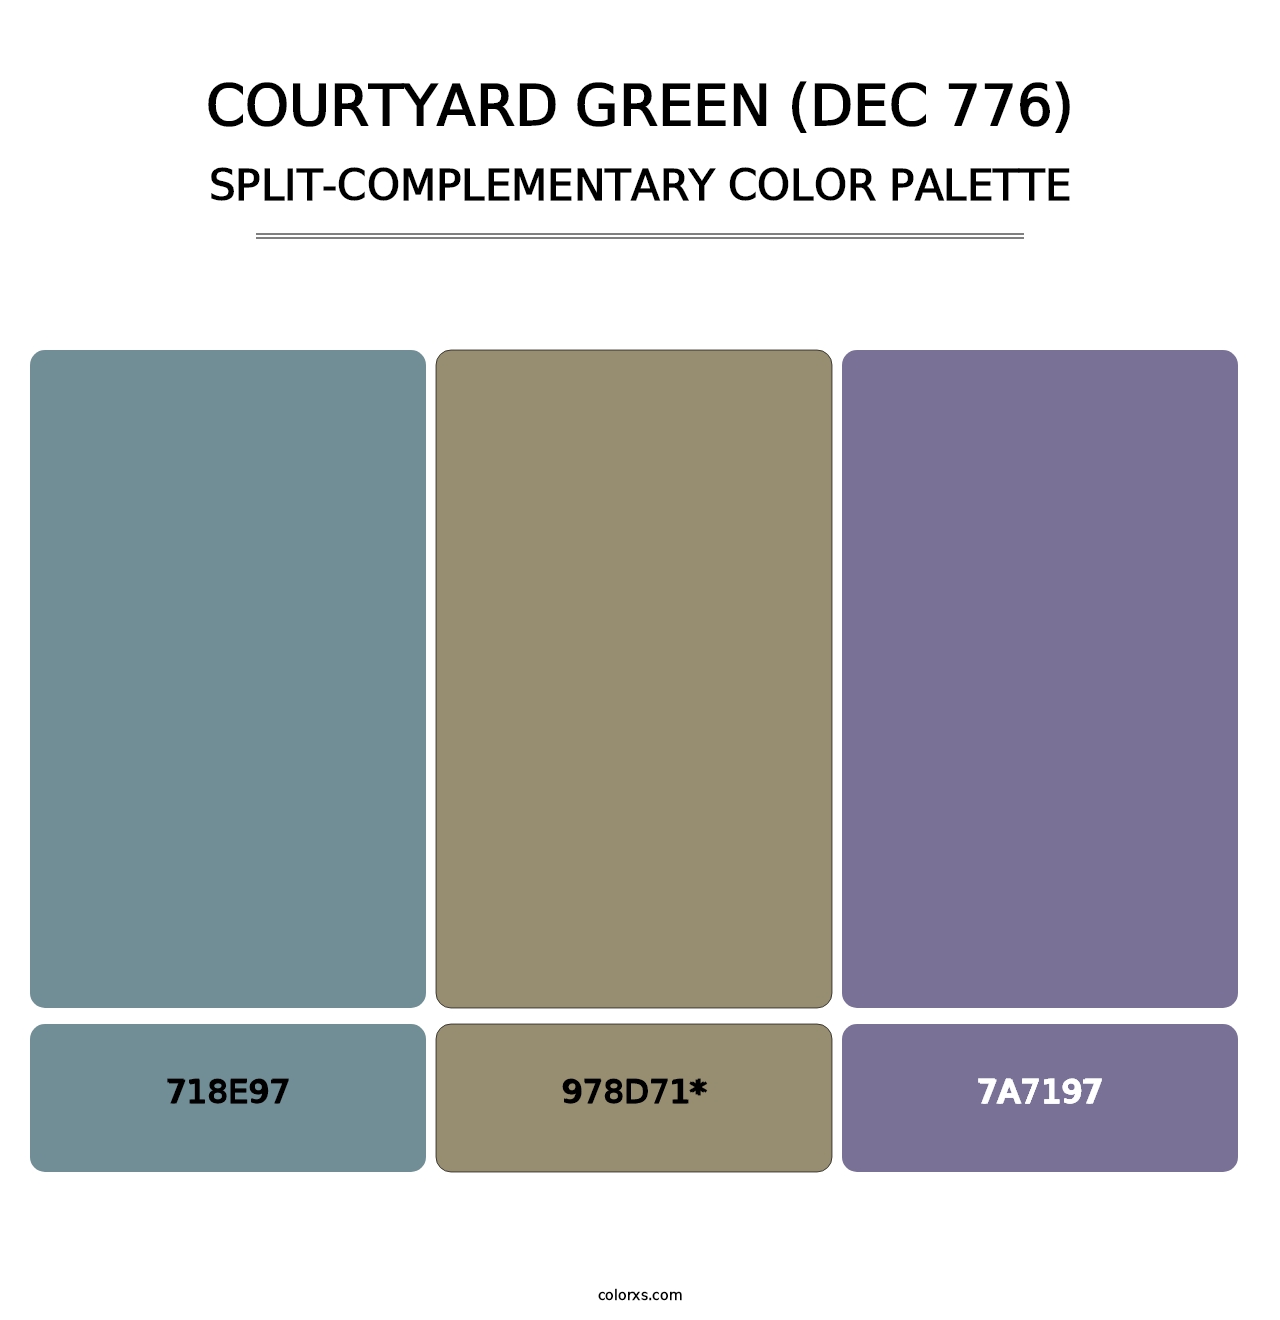 Courtyard Green (DEC 776) - Split-Complementary Color Palette